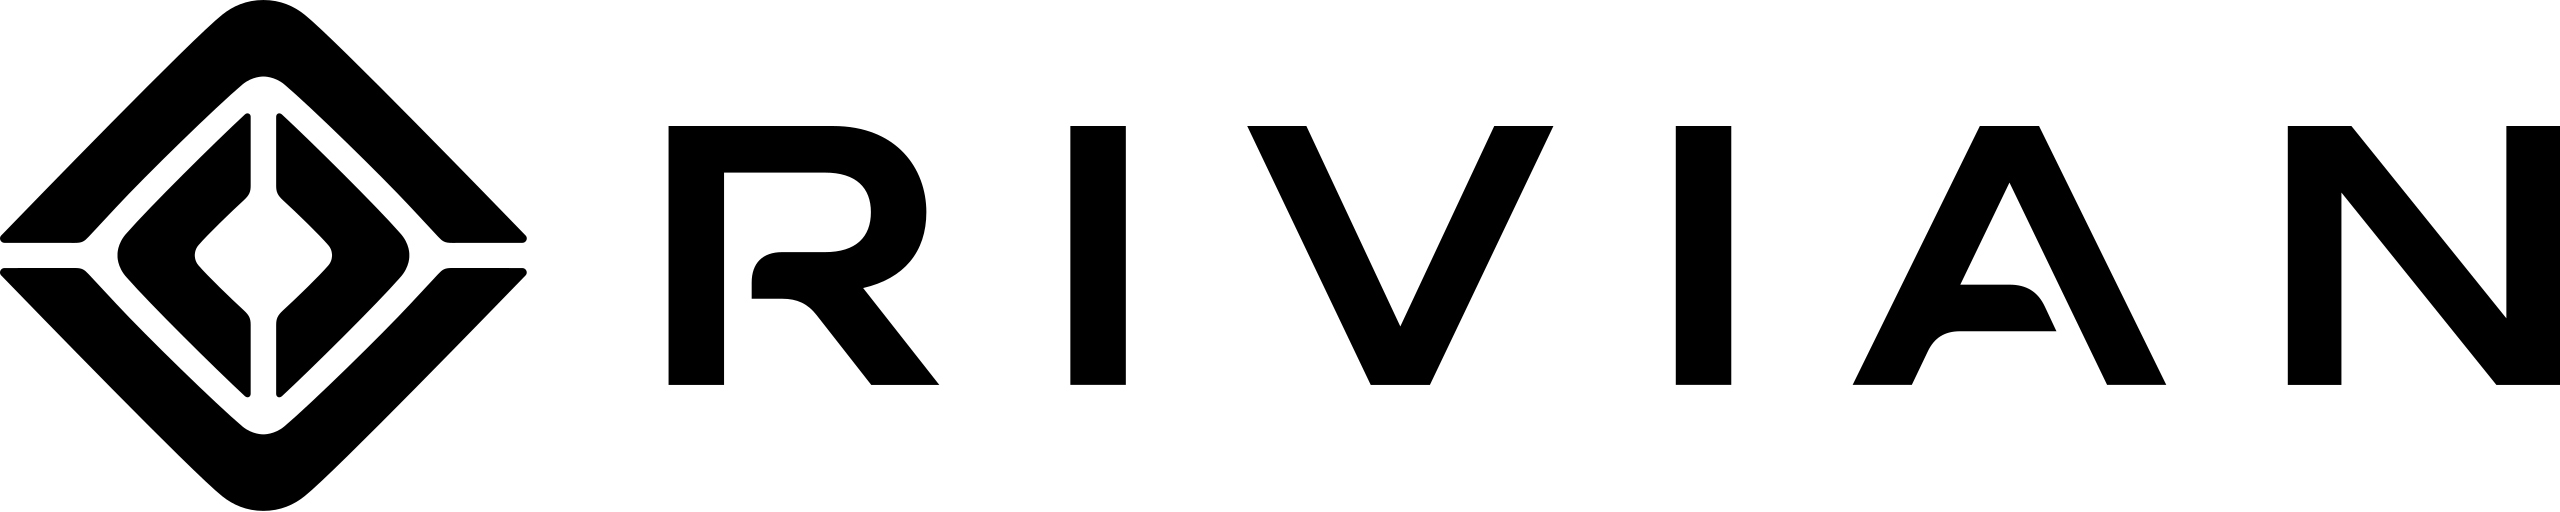 Rivian_logo_and_wordmark.jpg